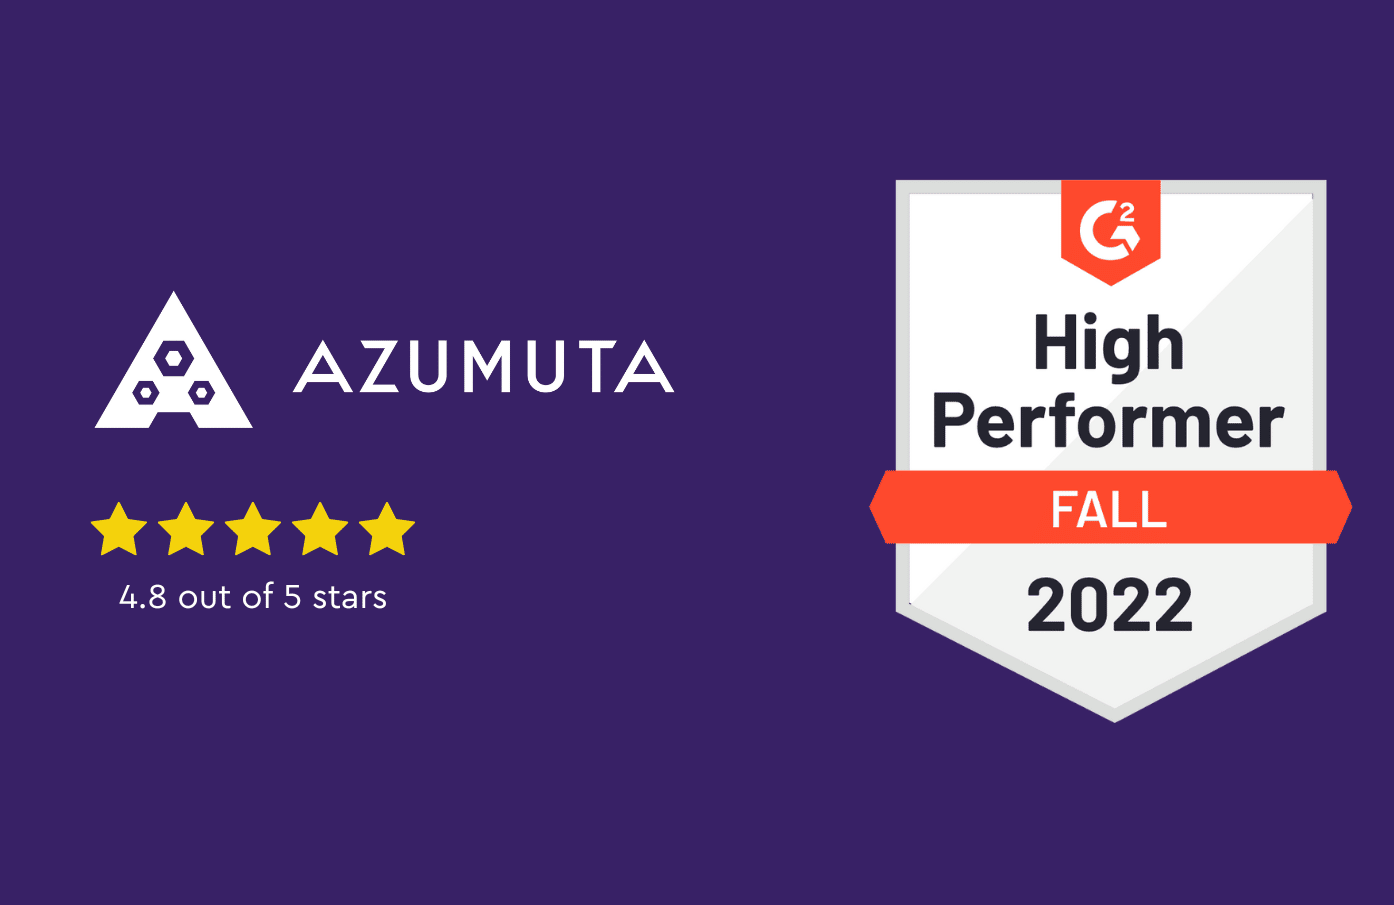 Azumuta is a G2 High Performer for Fall 2022